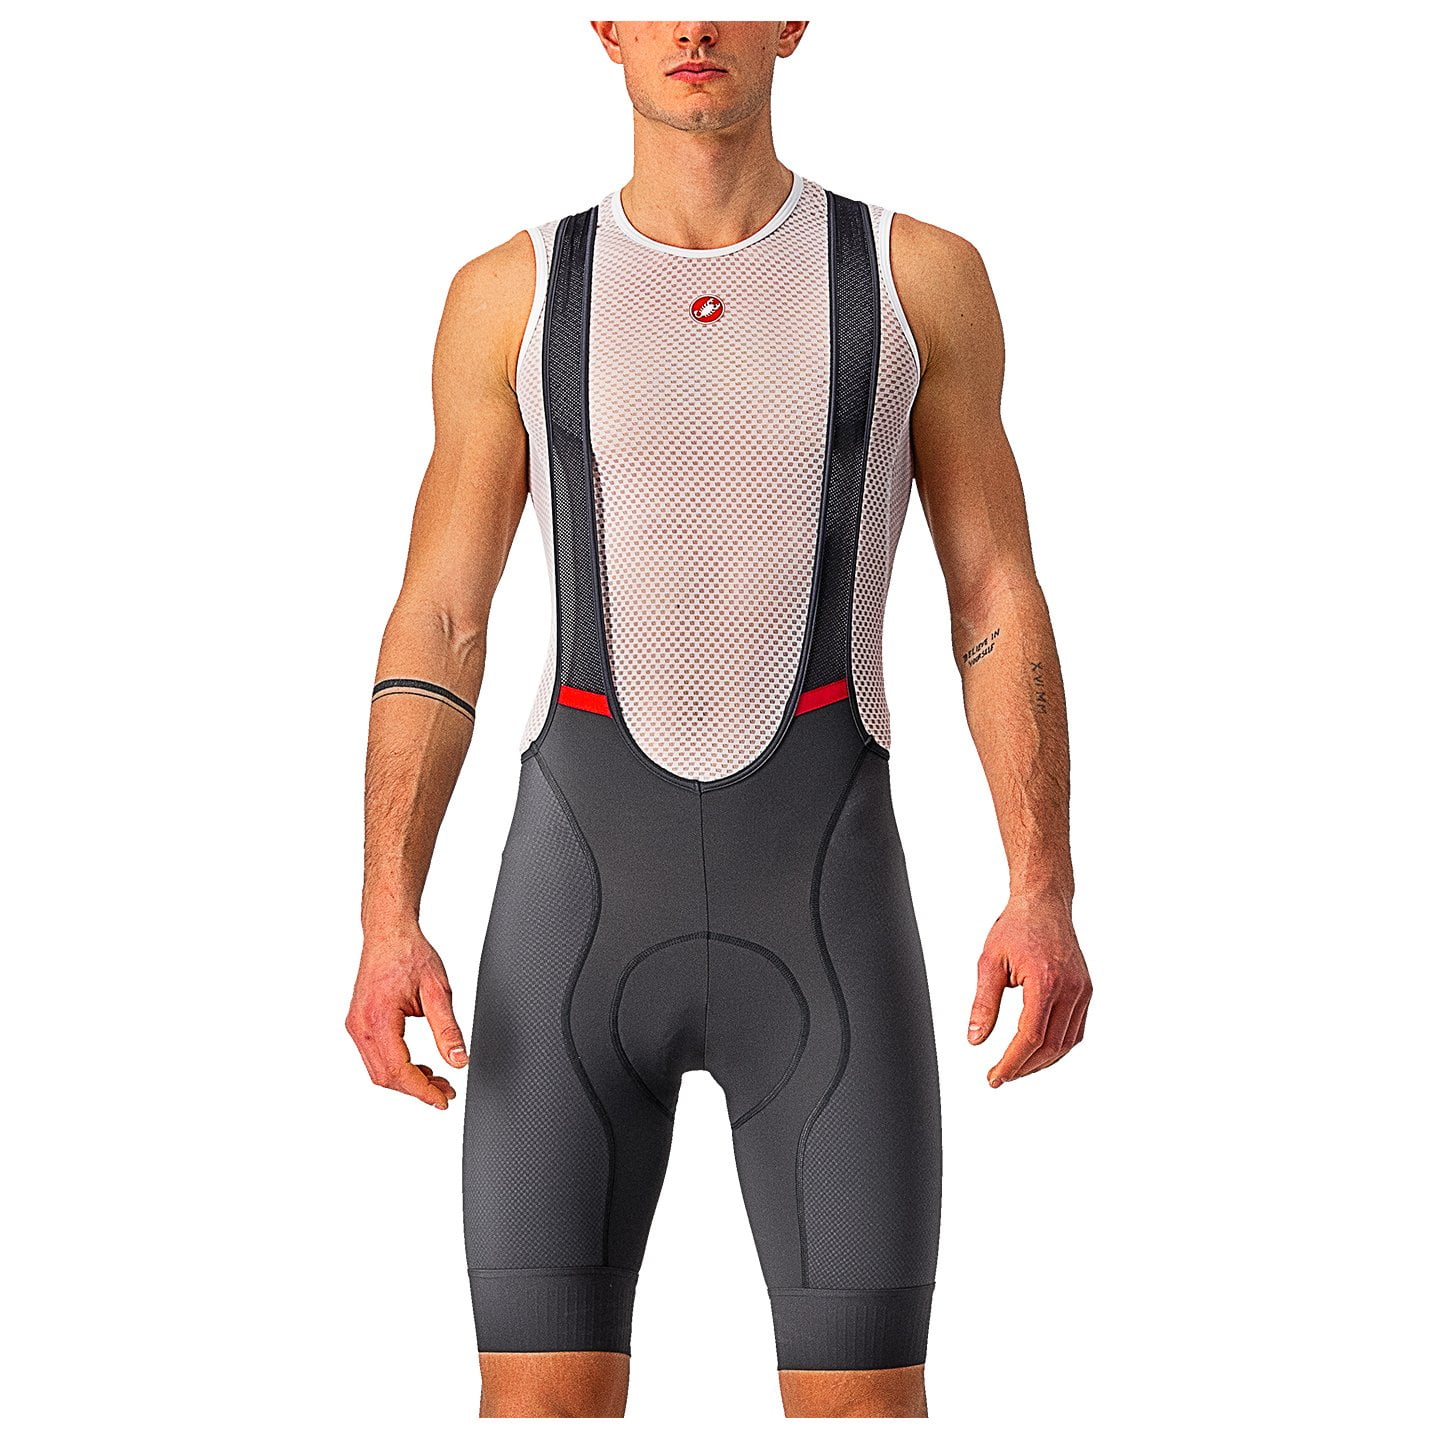 Competizione Bib Shorts Bib Shorts, for men, size 2XL, Cycle shorts, Cycling clothing